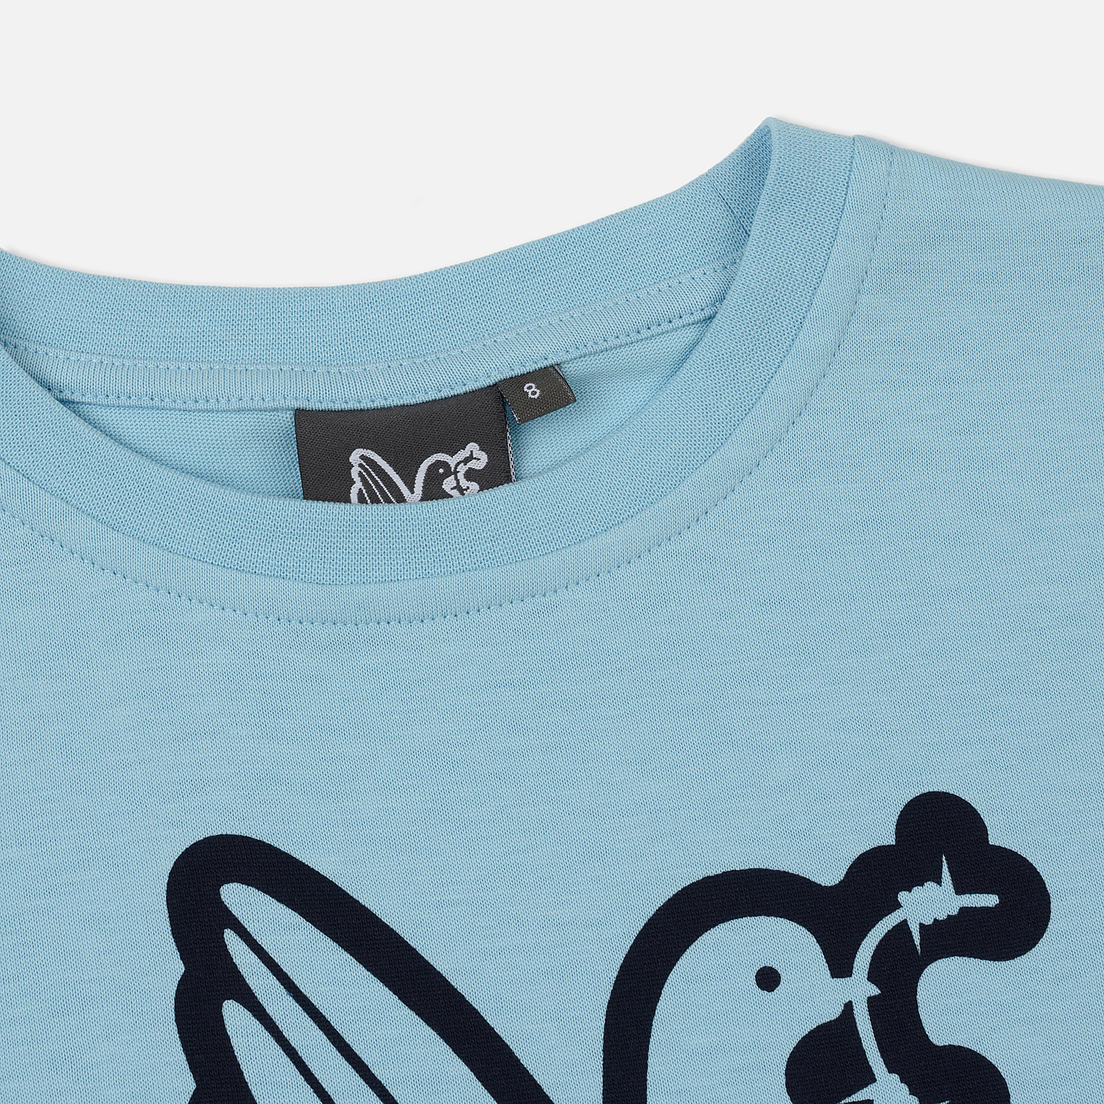 Peaceful Hooligan Детская футболка Outline Dove